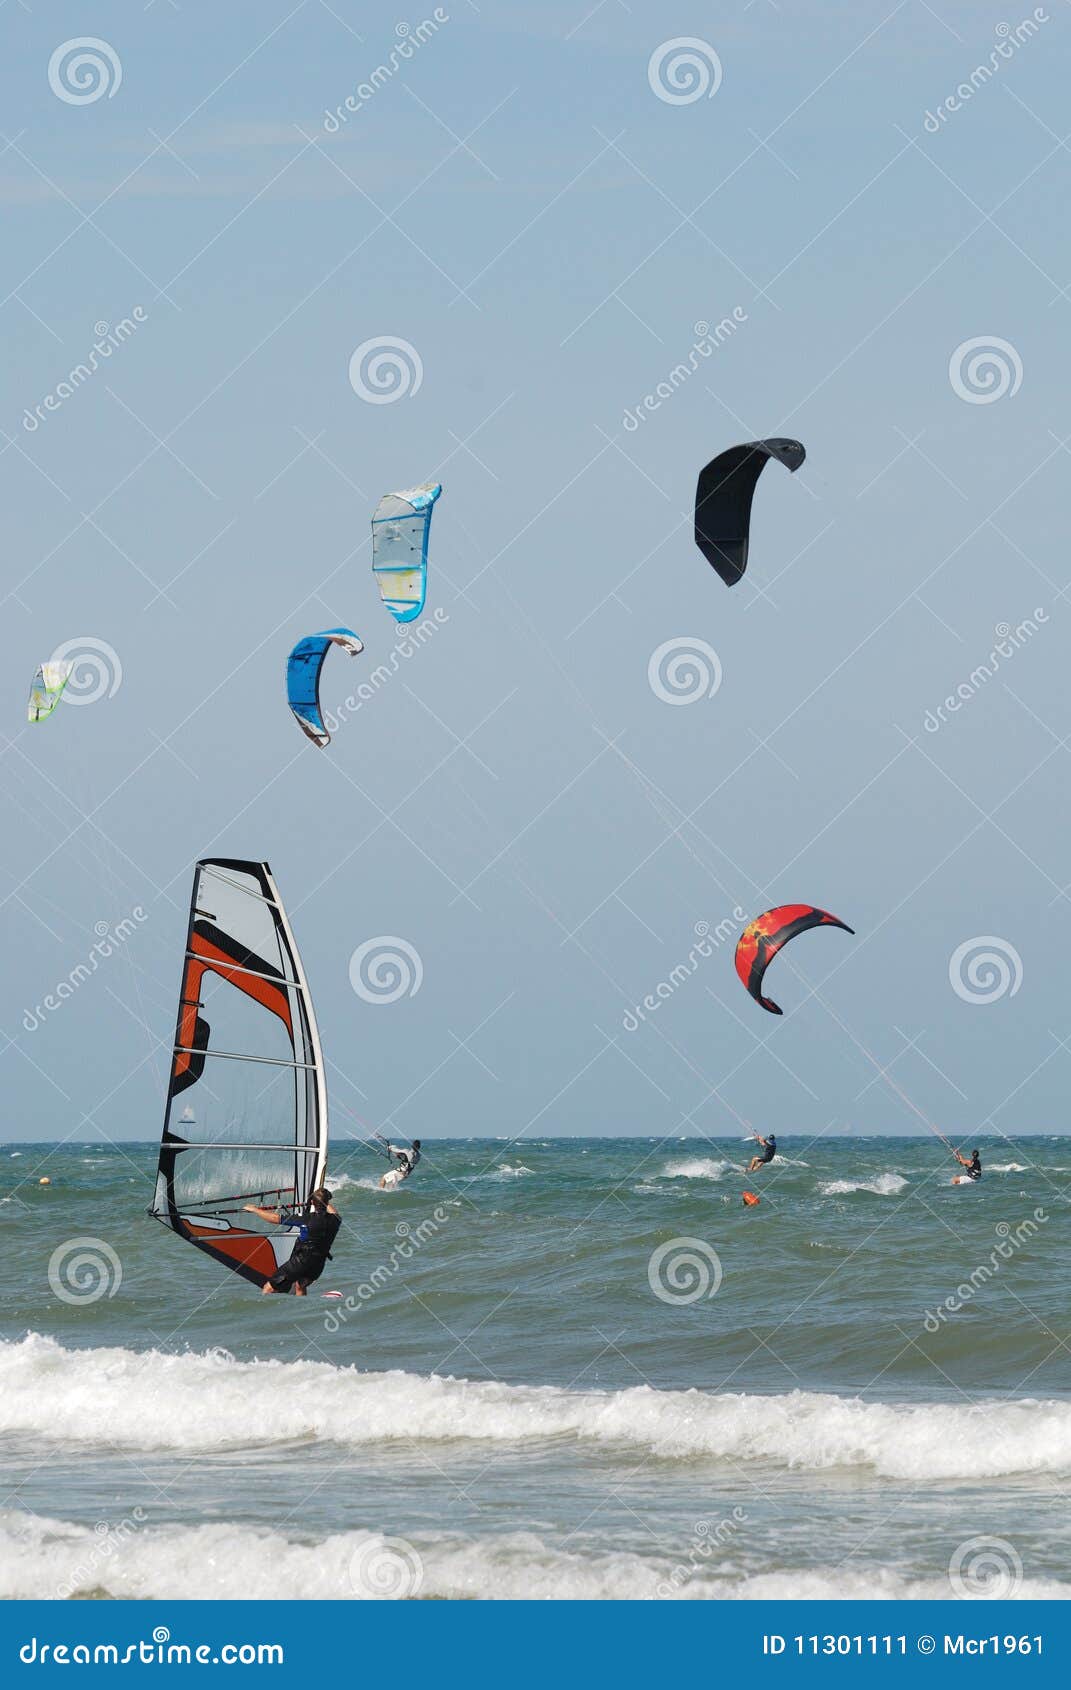 windsurf and kitesurf 2